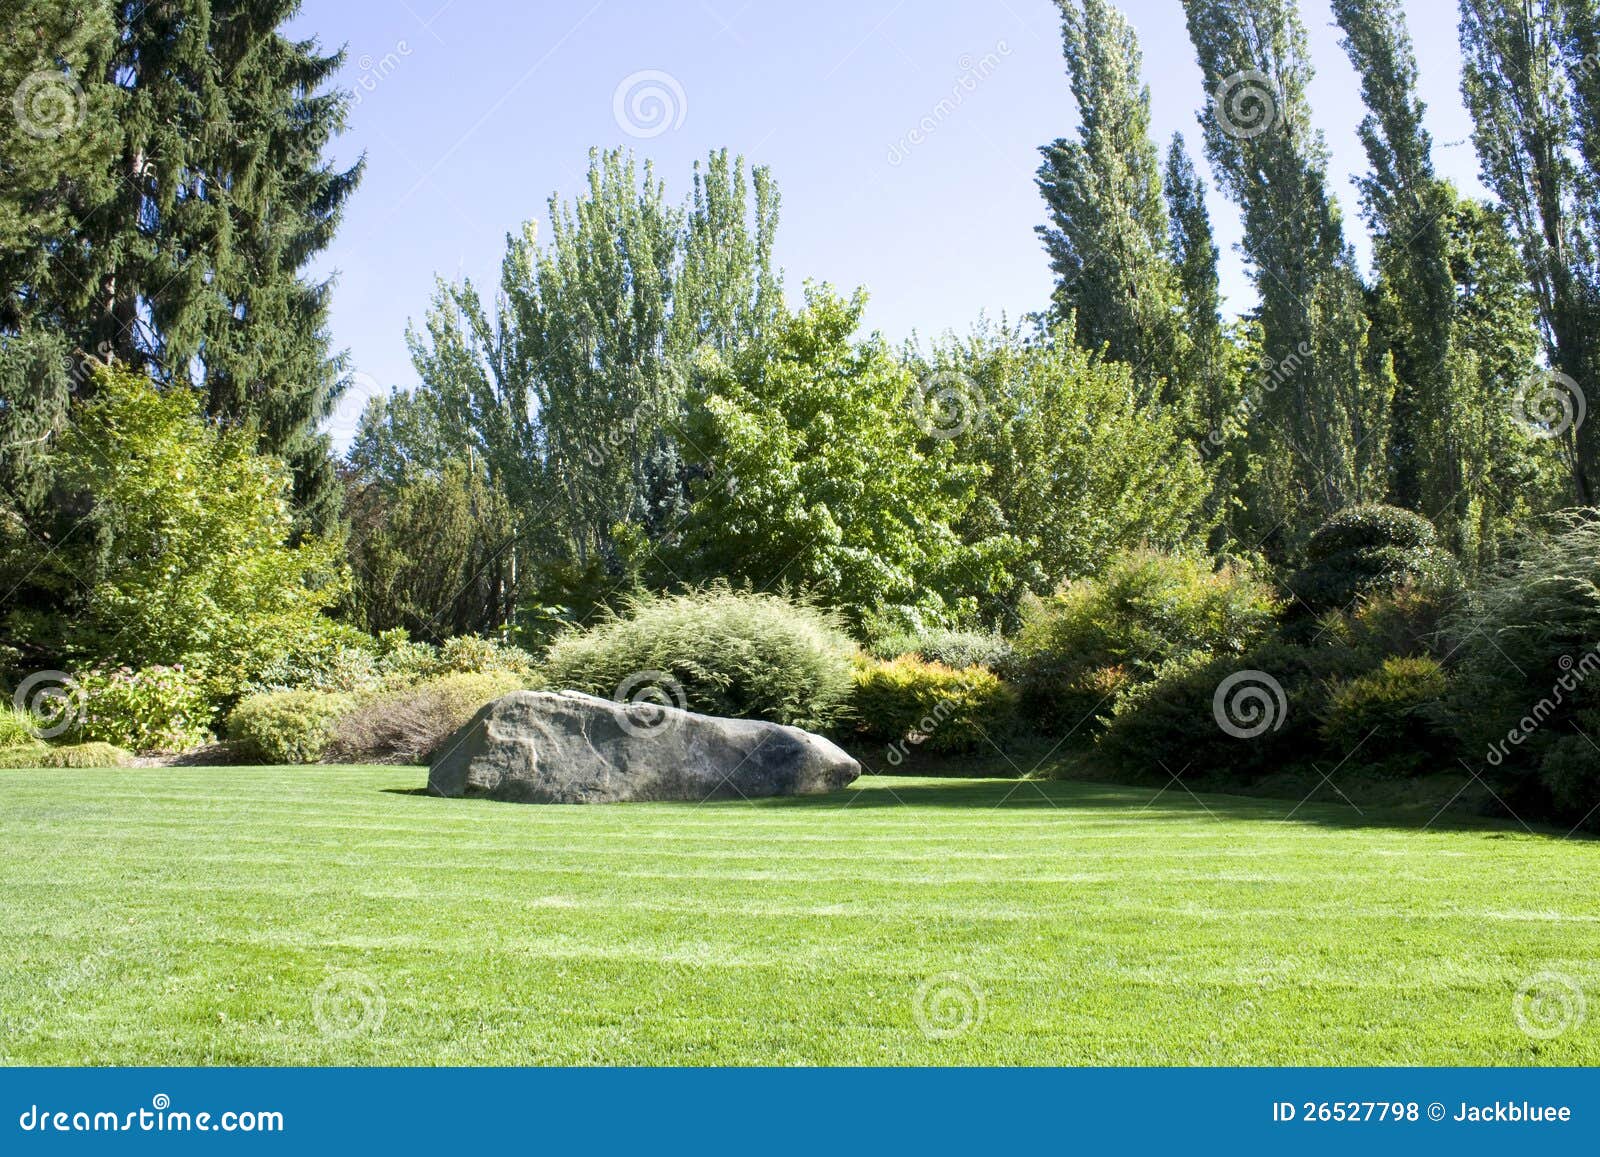 beautiful yard with lush greenery